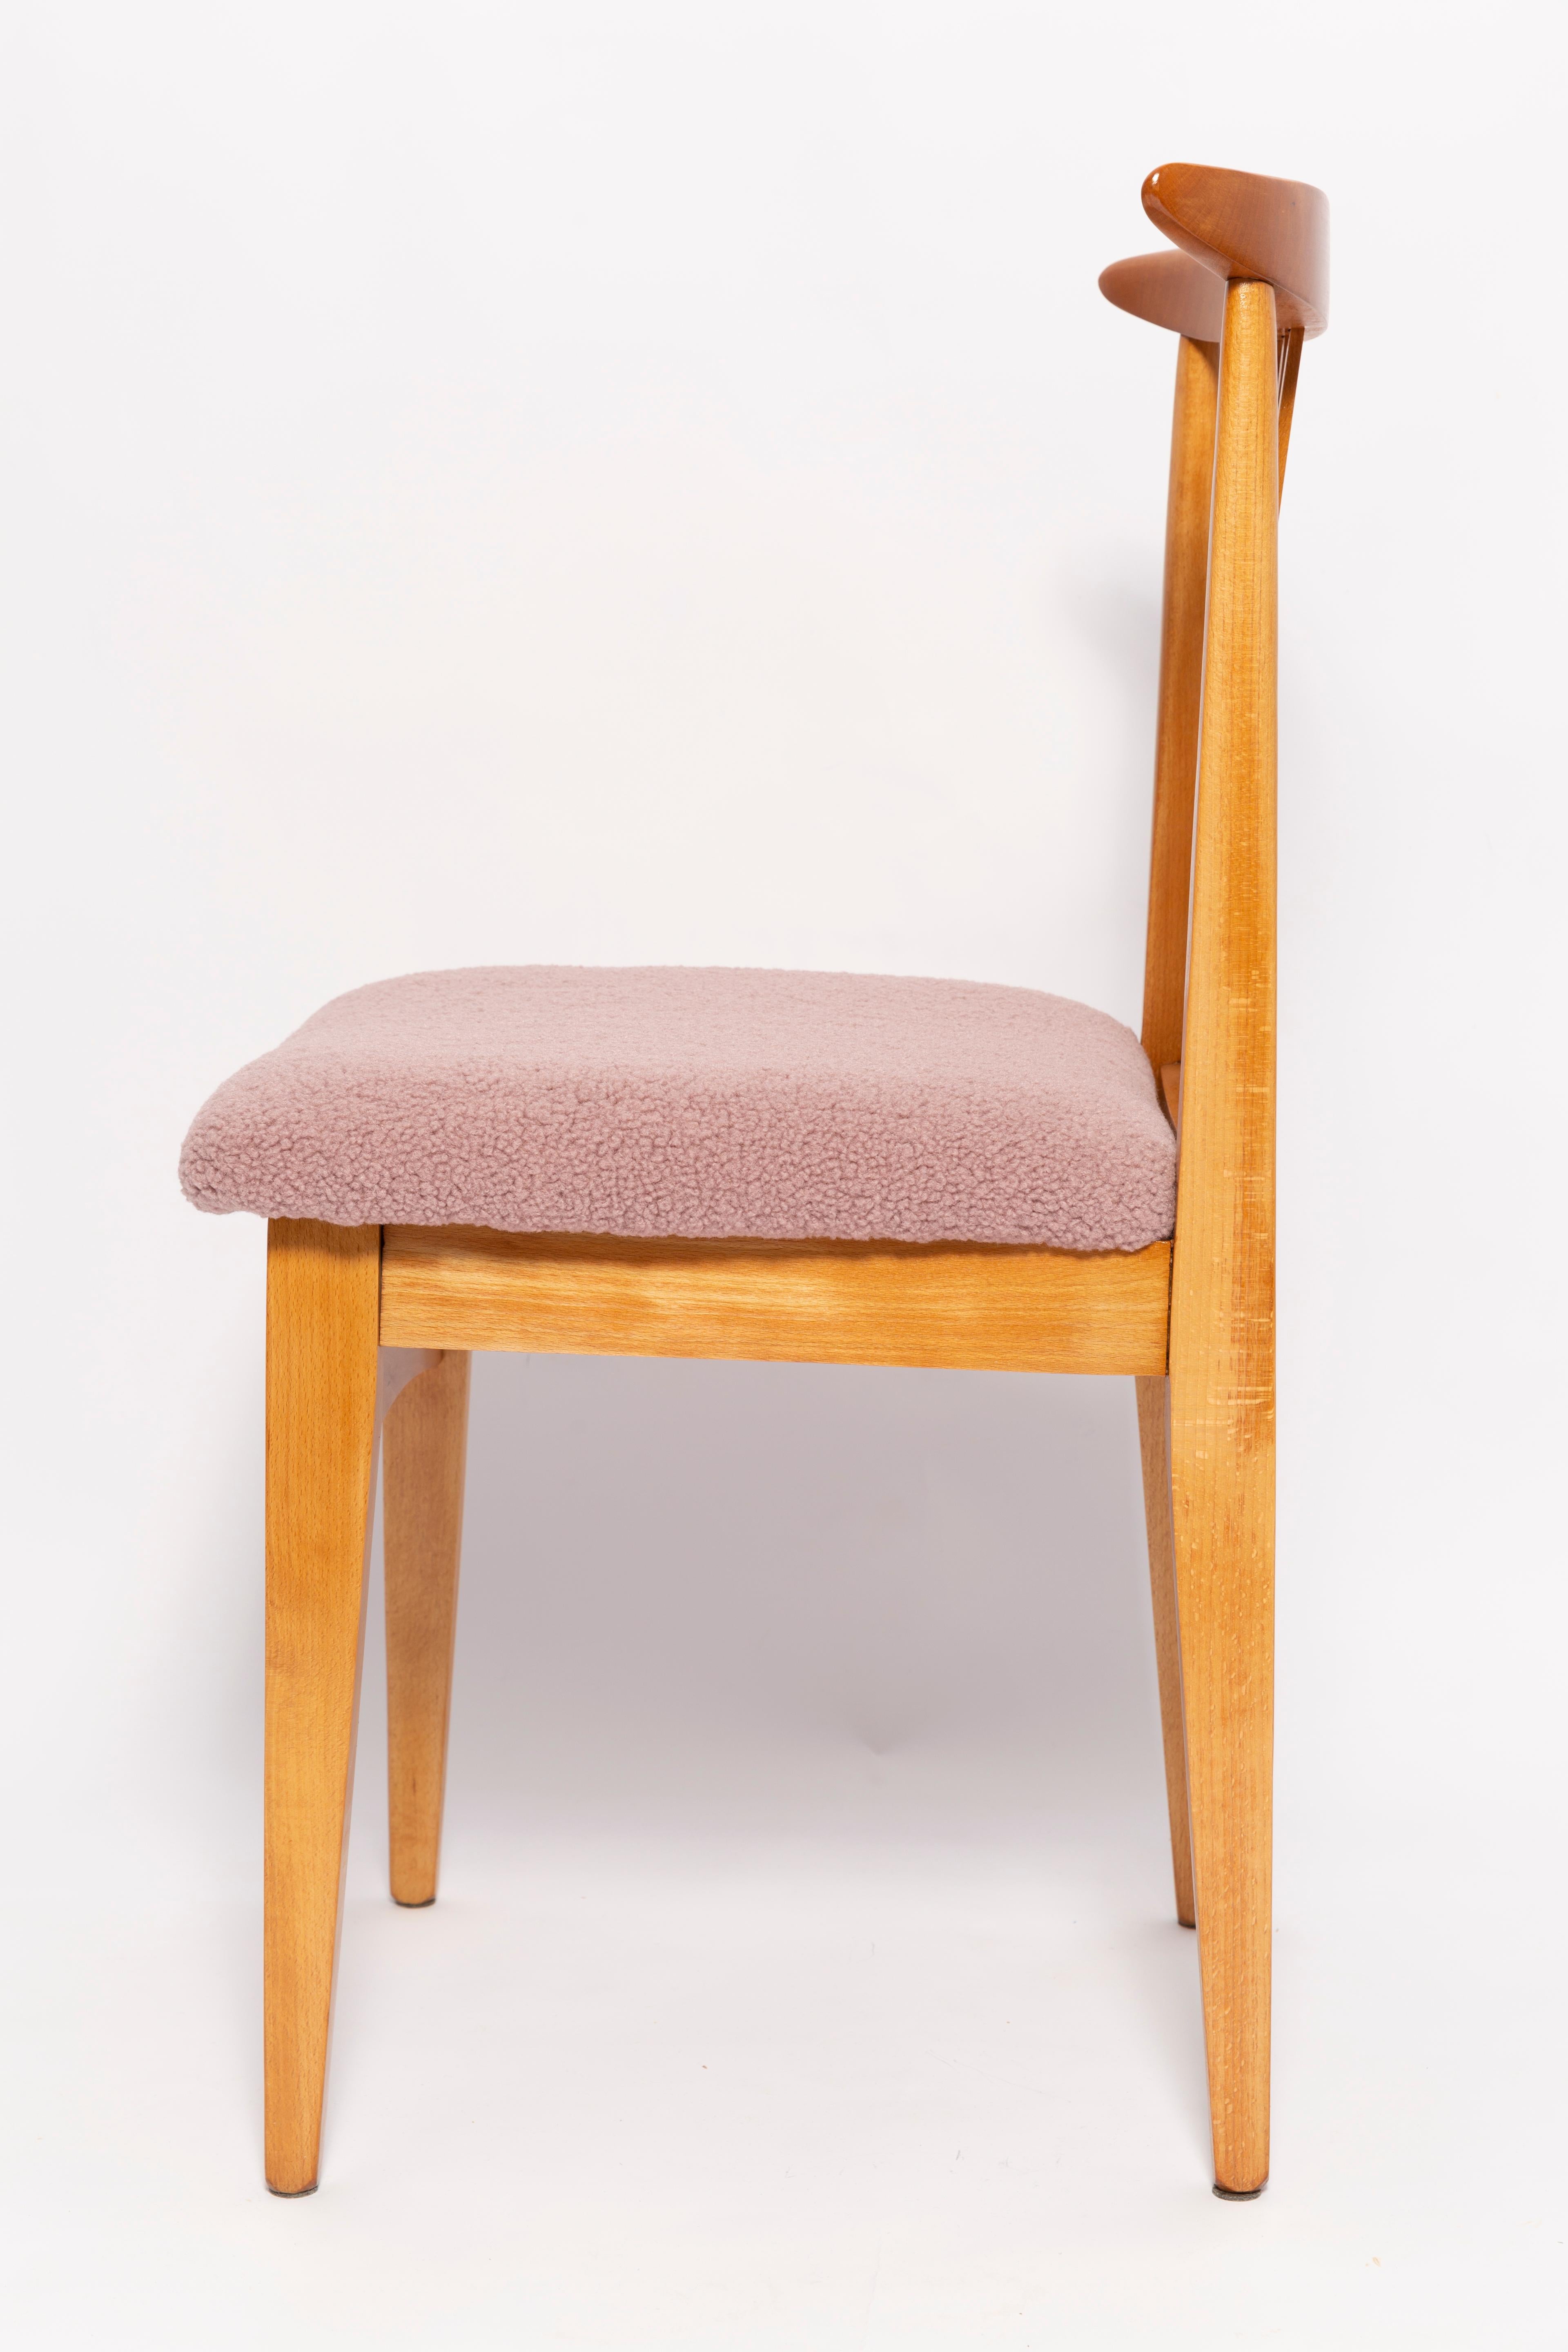 Bouclé Ten Mid-Century Pink Blush Boucle Chairs, Light Wood, M. Zielinski, Europe 1960s For Sale